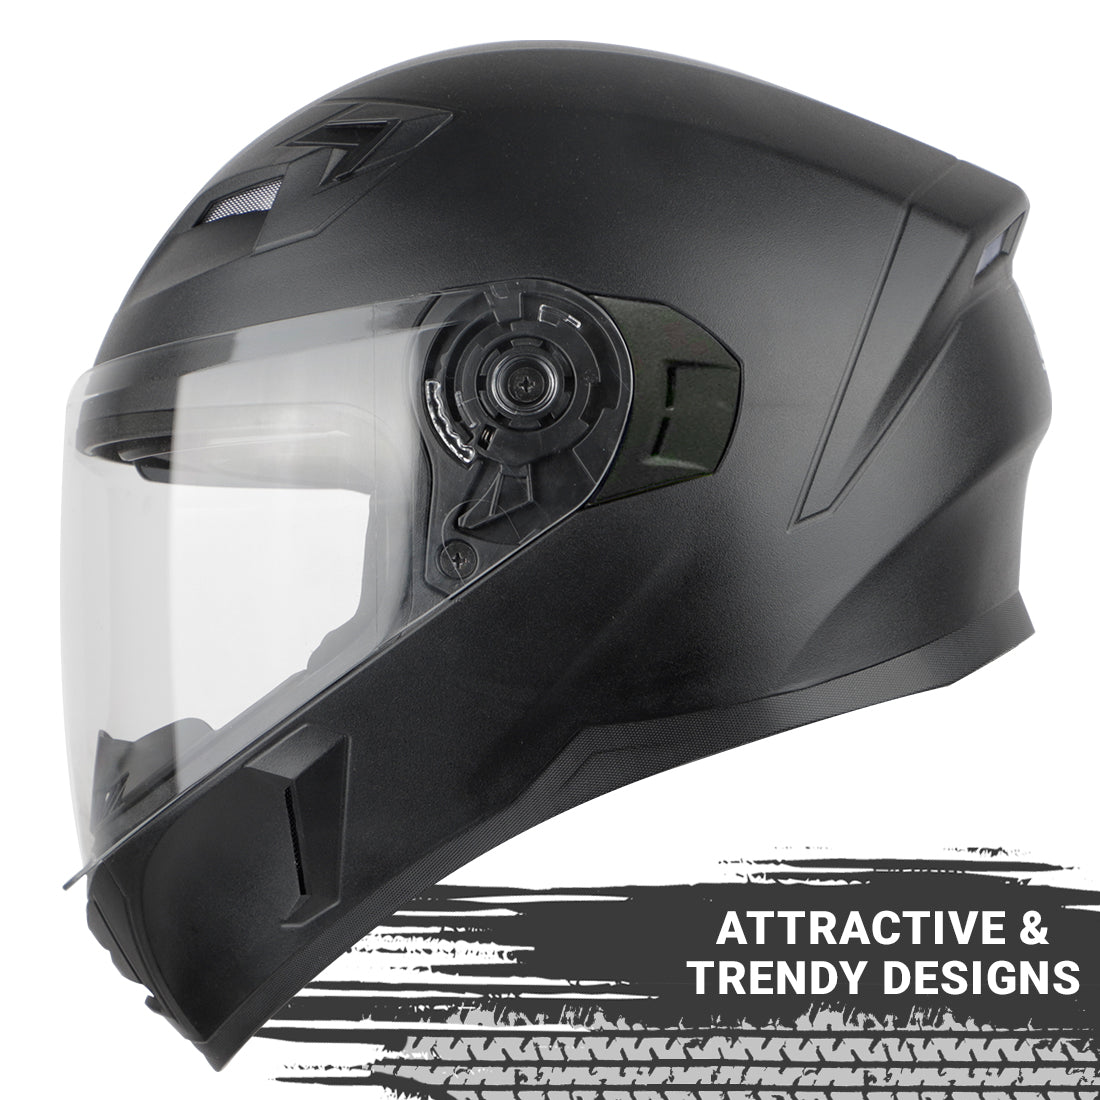 Steelbird SBA-21 GT ISI Certified Full Face Helmet with Clear Visor